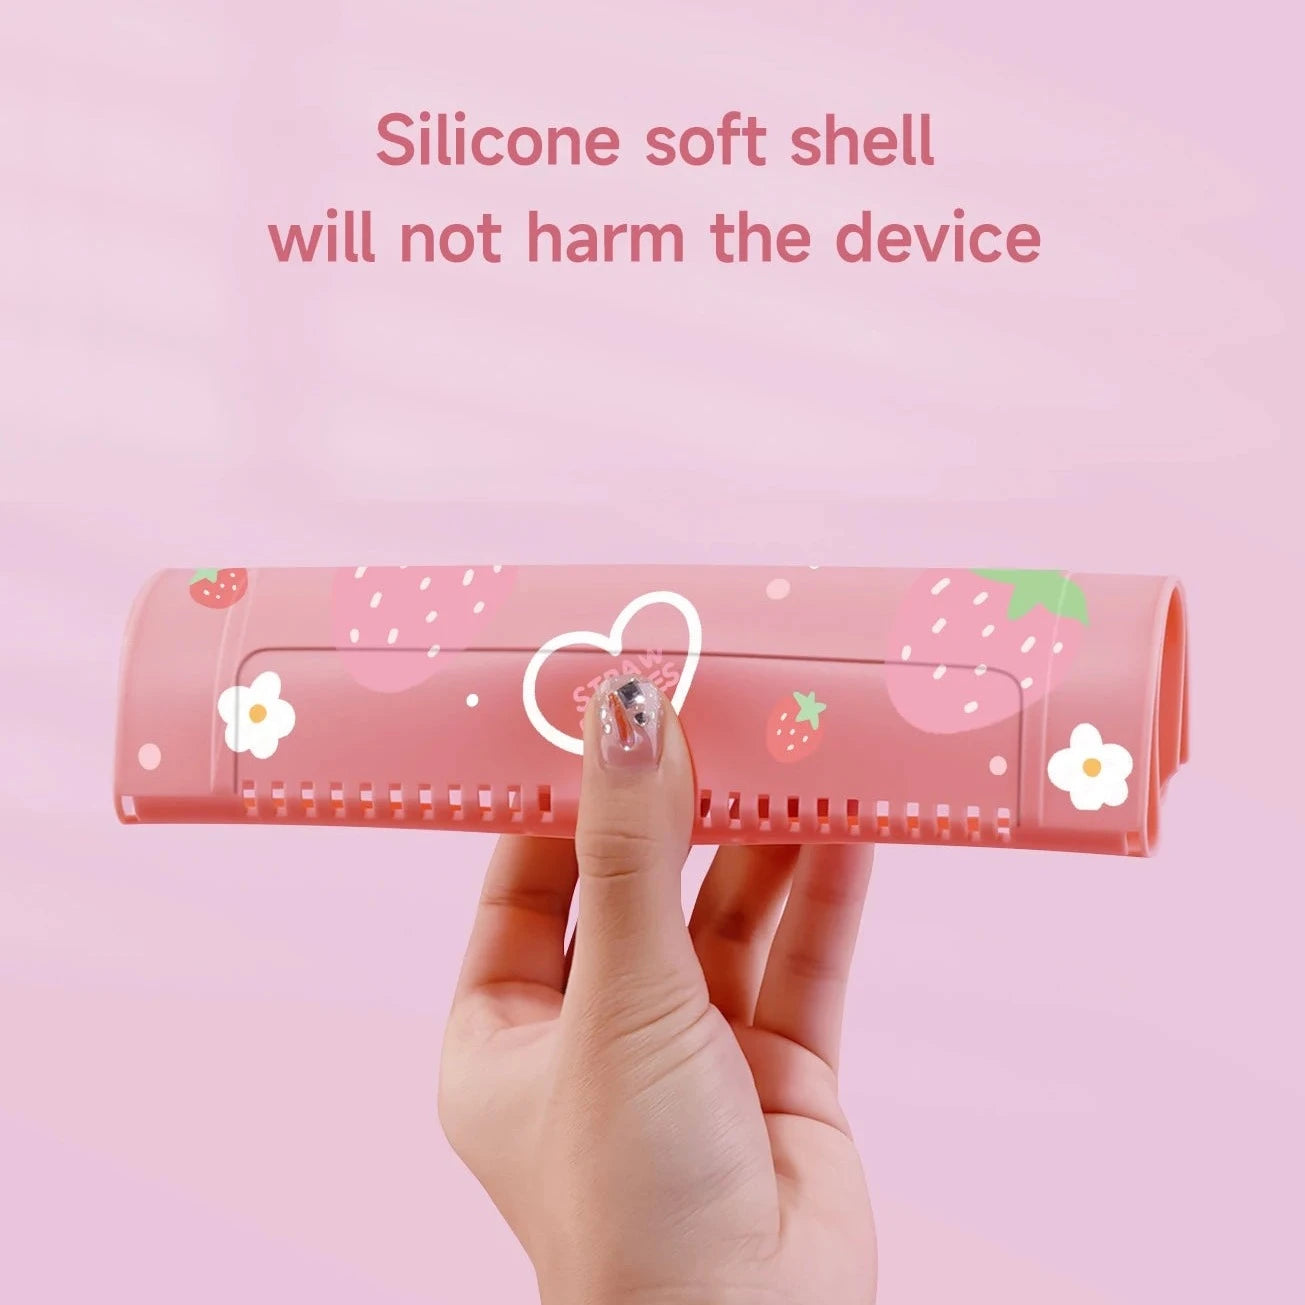 Strawberry Hearts Nintendo Switch Case